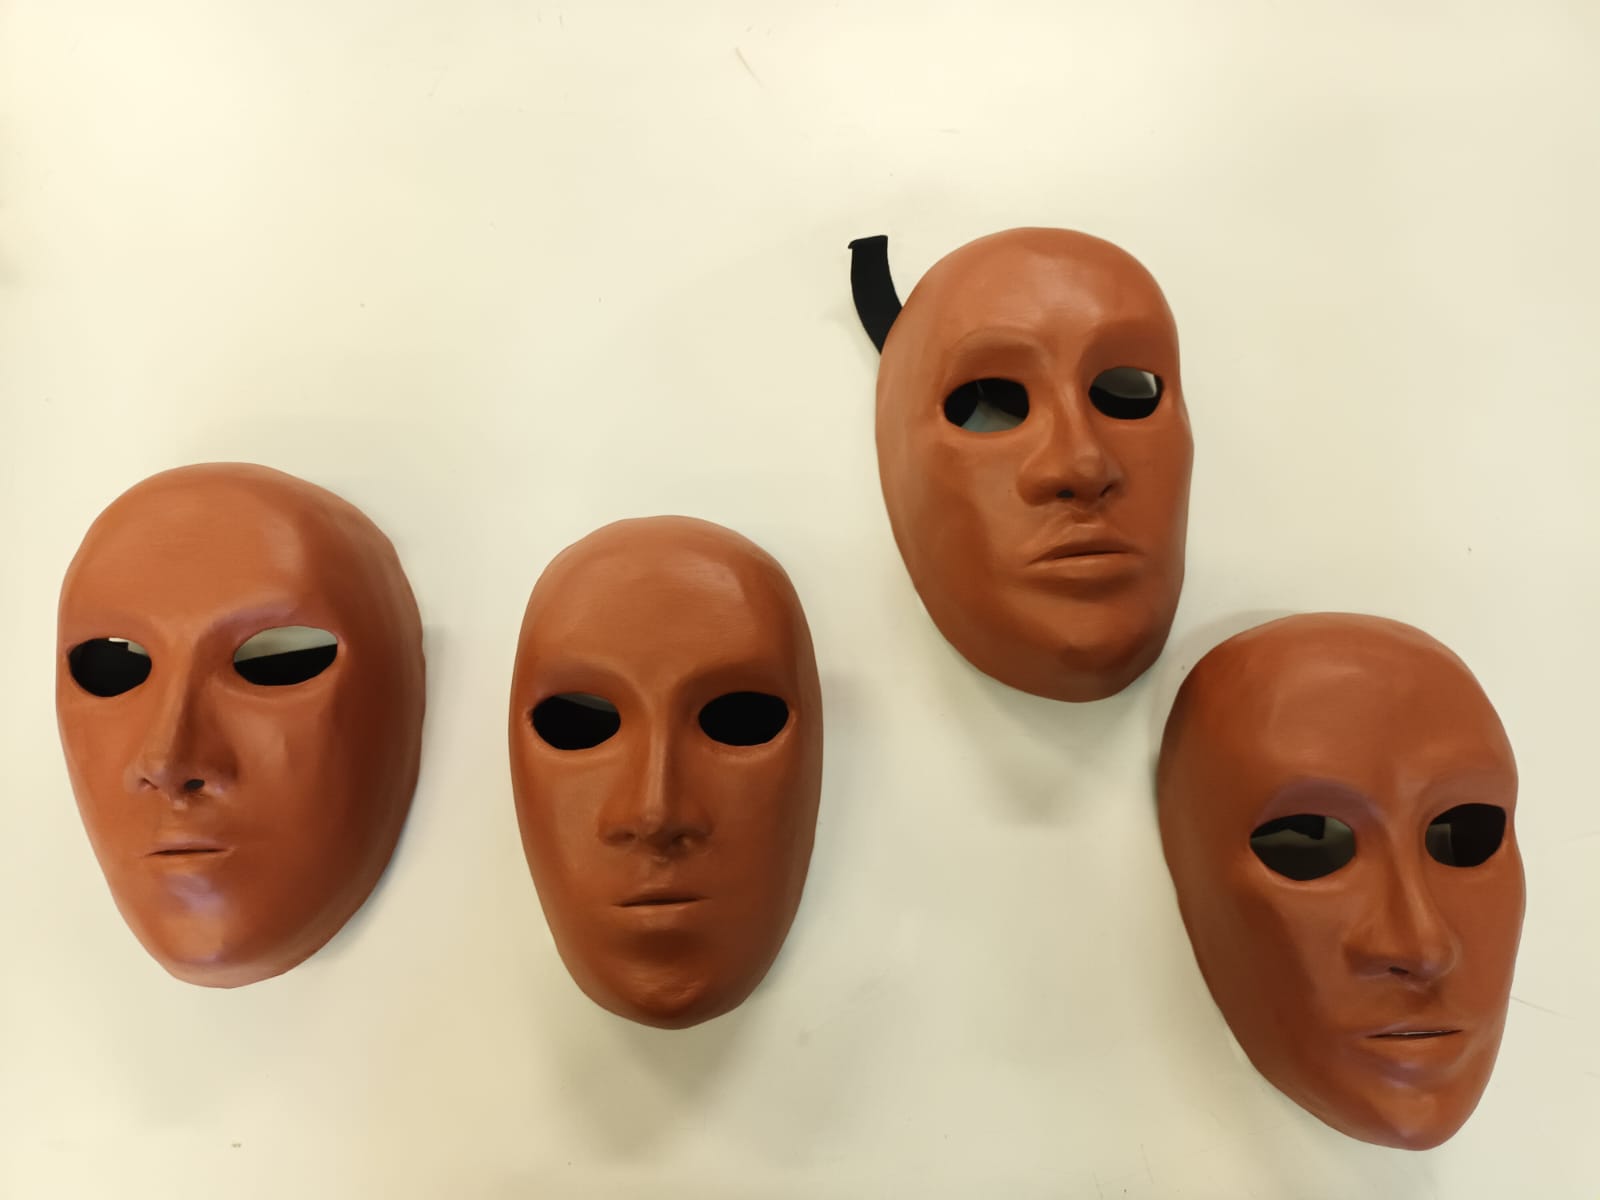 Fotografia colorida de quatro máscara neutras na cor marrom